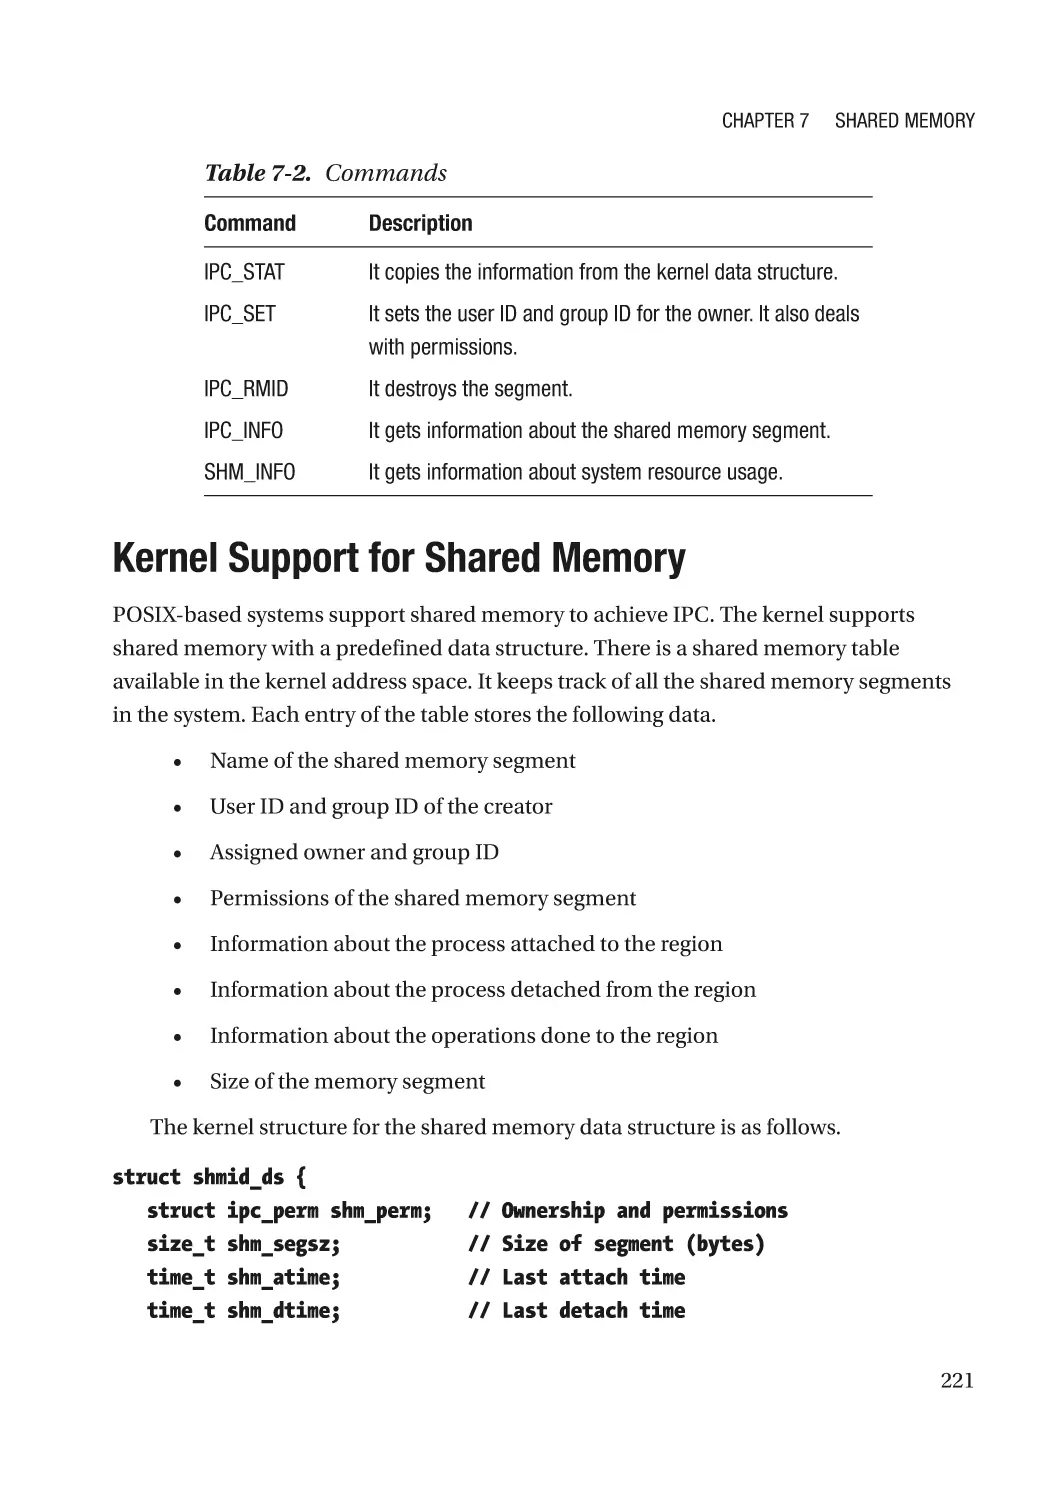 Kernel Support for Shared Memory